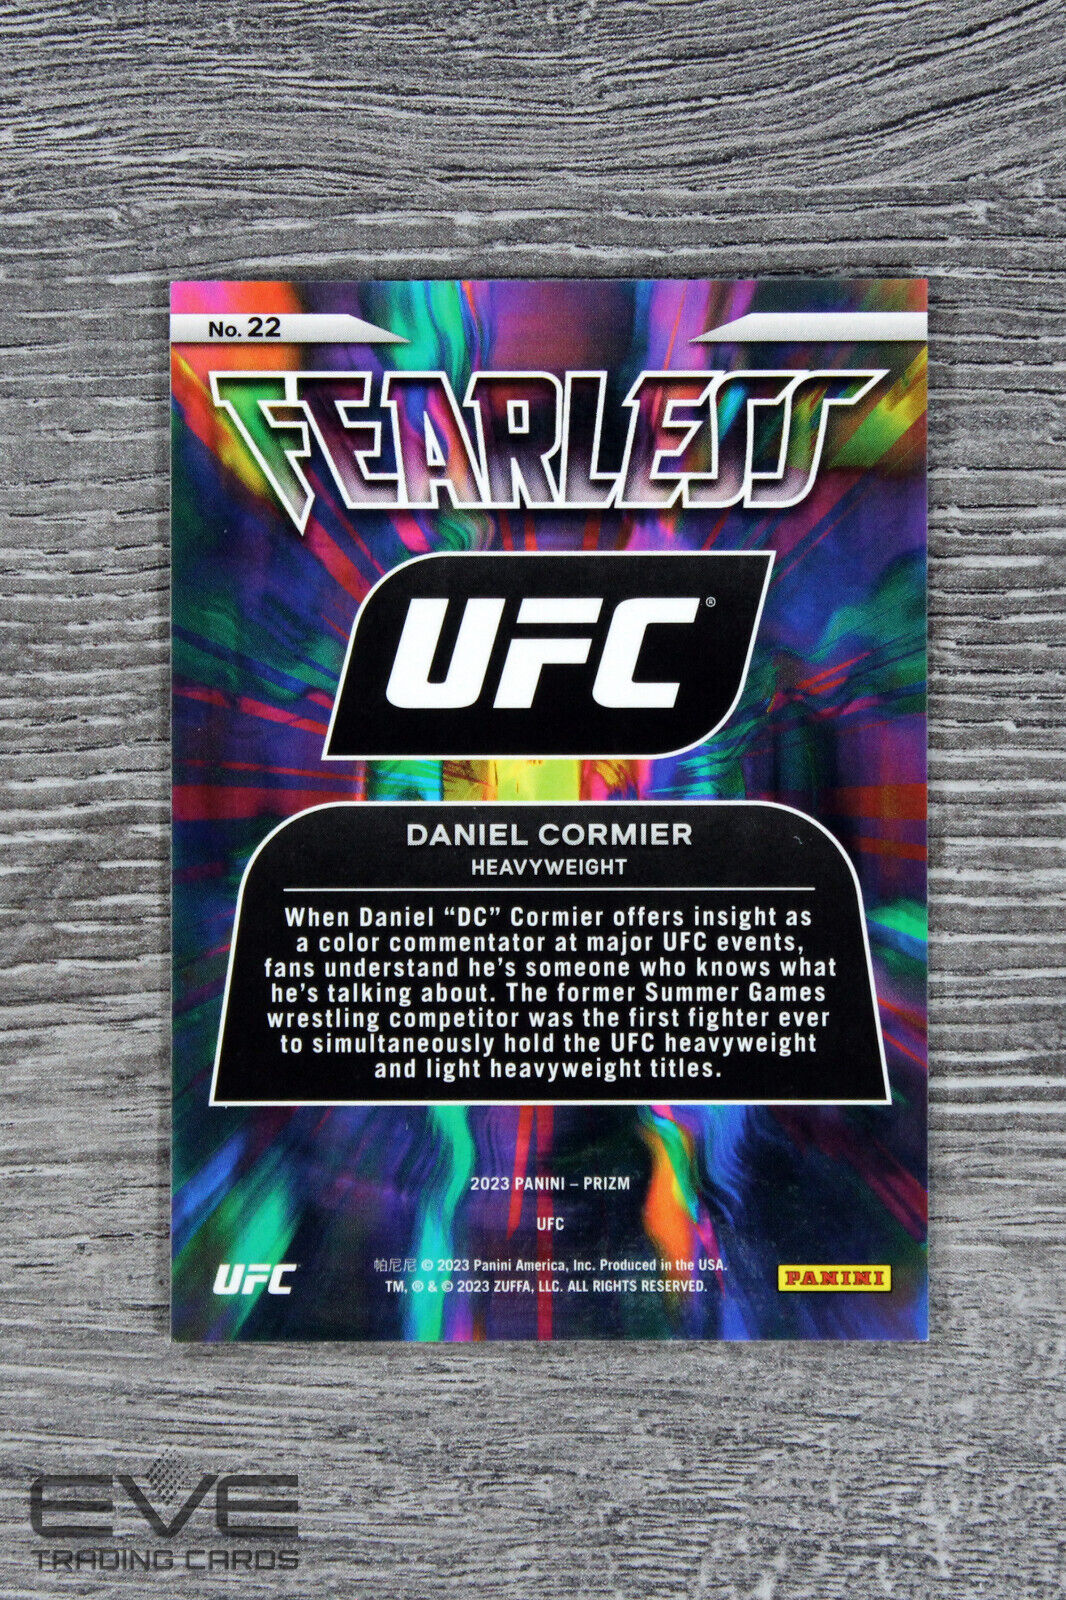 2023 Panini Prizm UFC Card "Fearless" #22 Daniel Cormier - NM/M